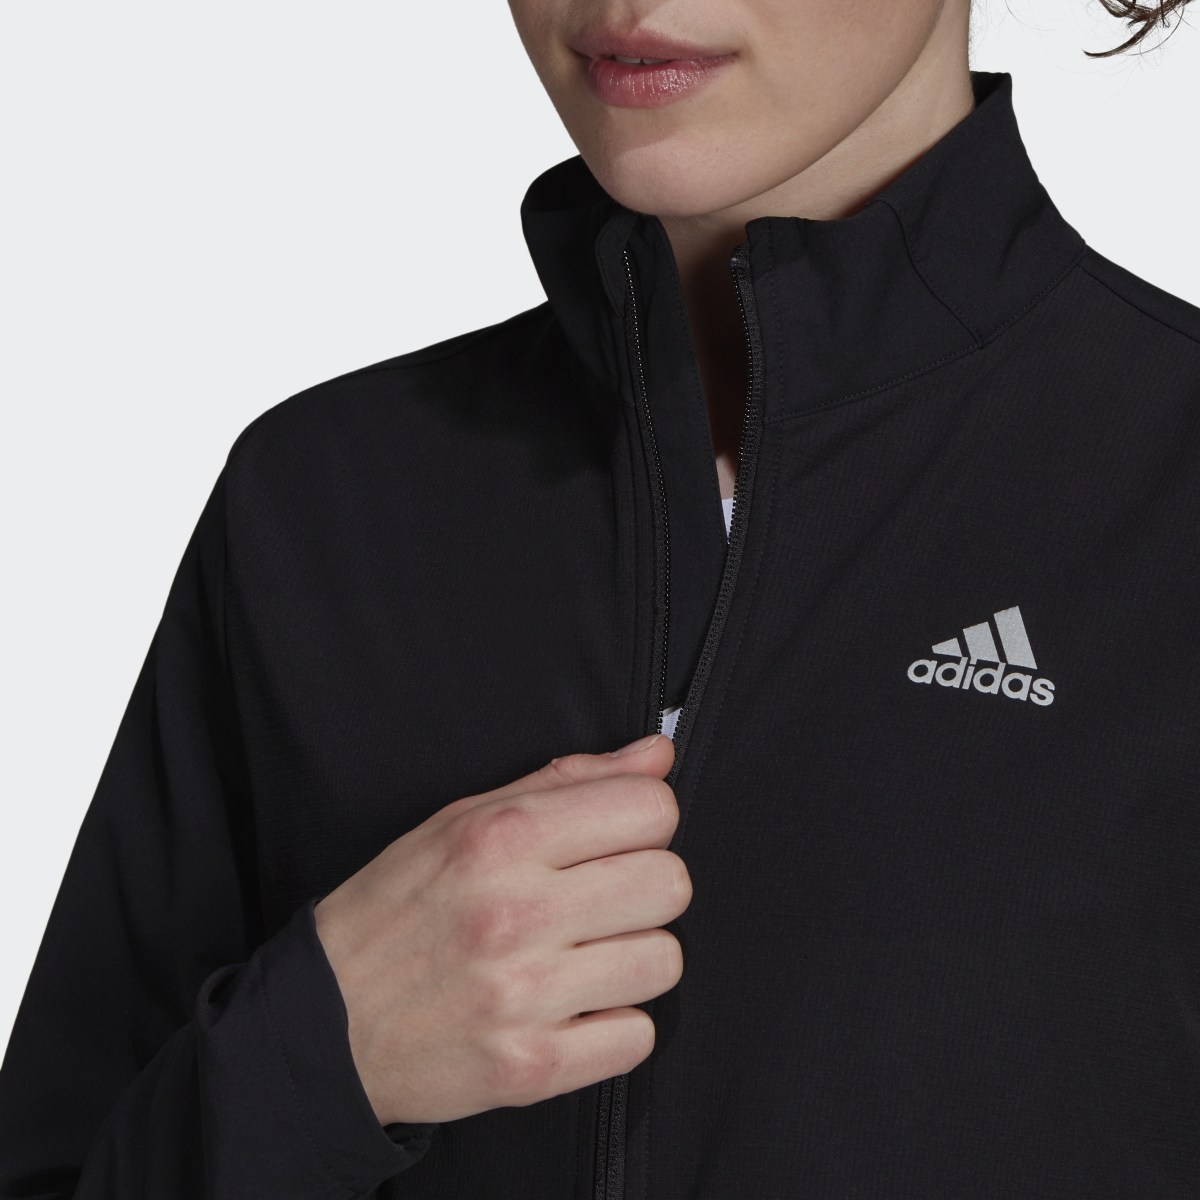 Adidas Own The Run Soft Shell Jacket. 6